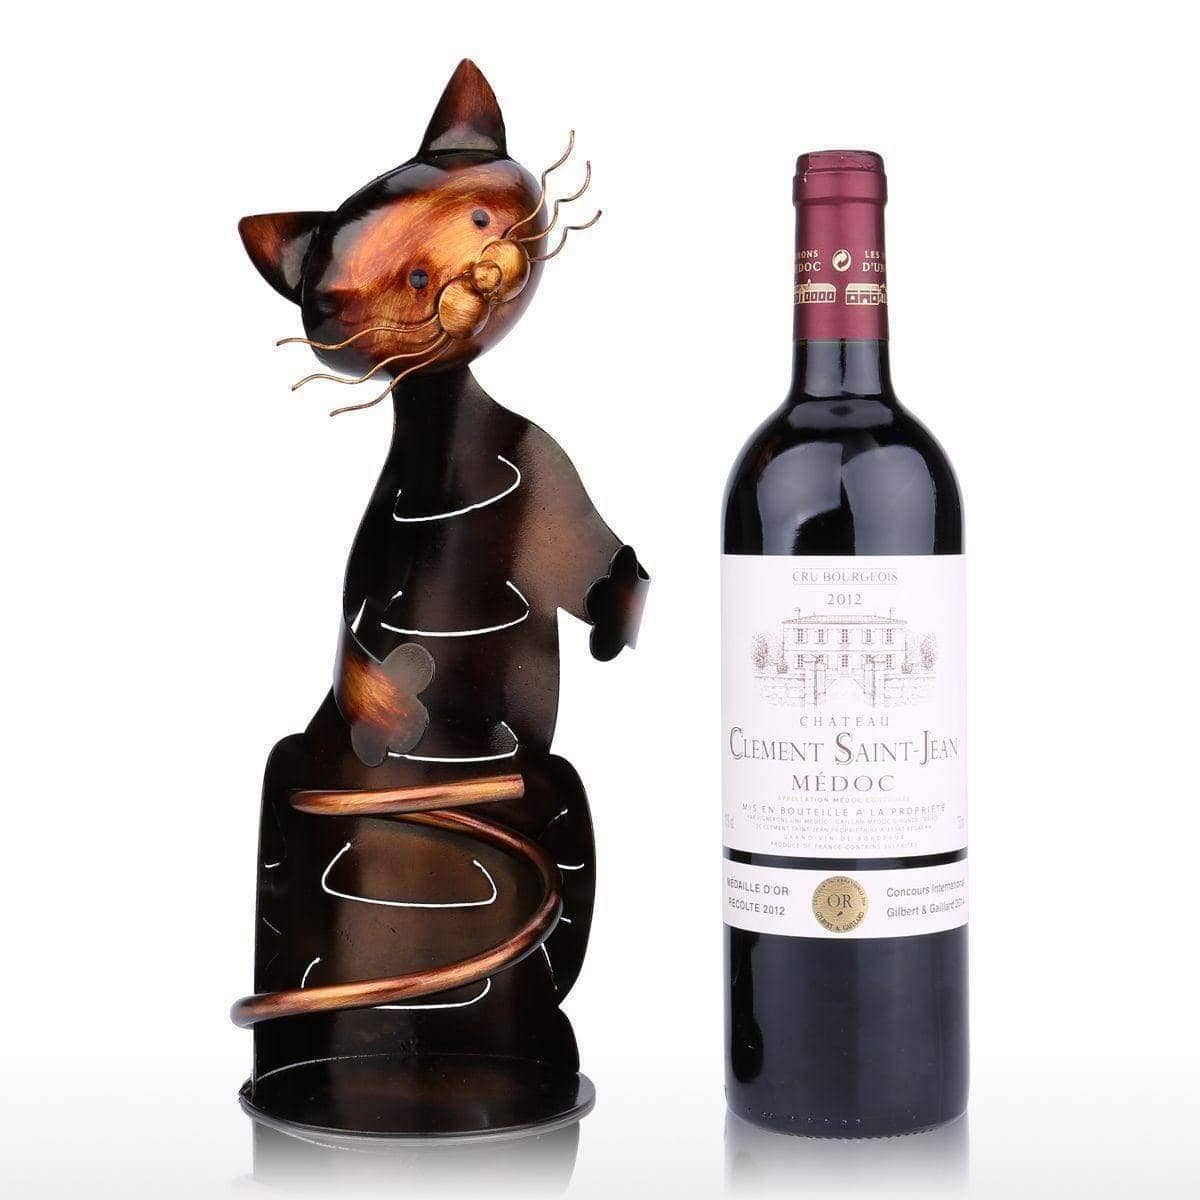 Cat Hug Wine Bottle Holder Rack - Cozy Up with Your Favorite Wine